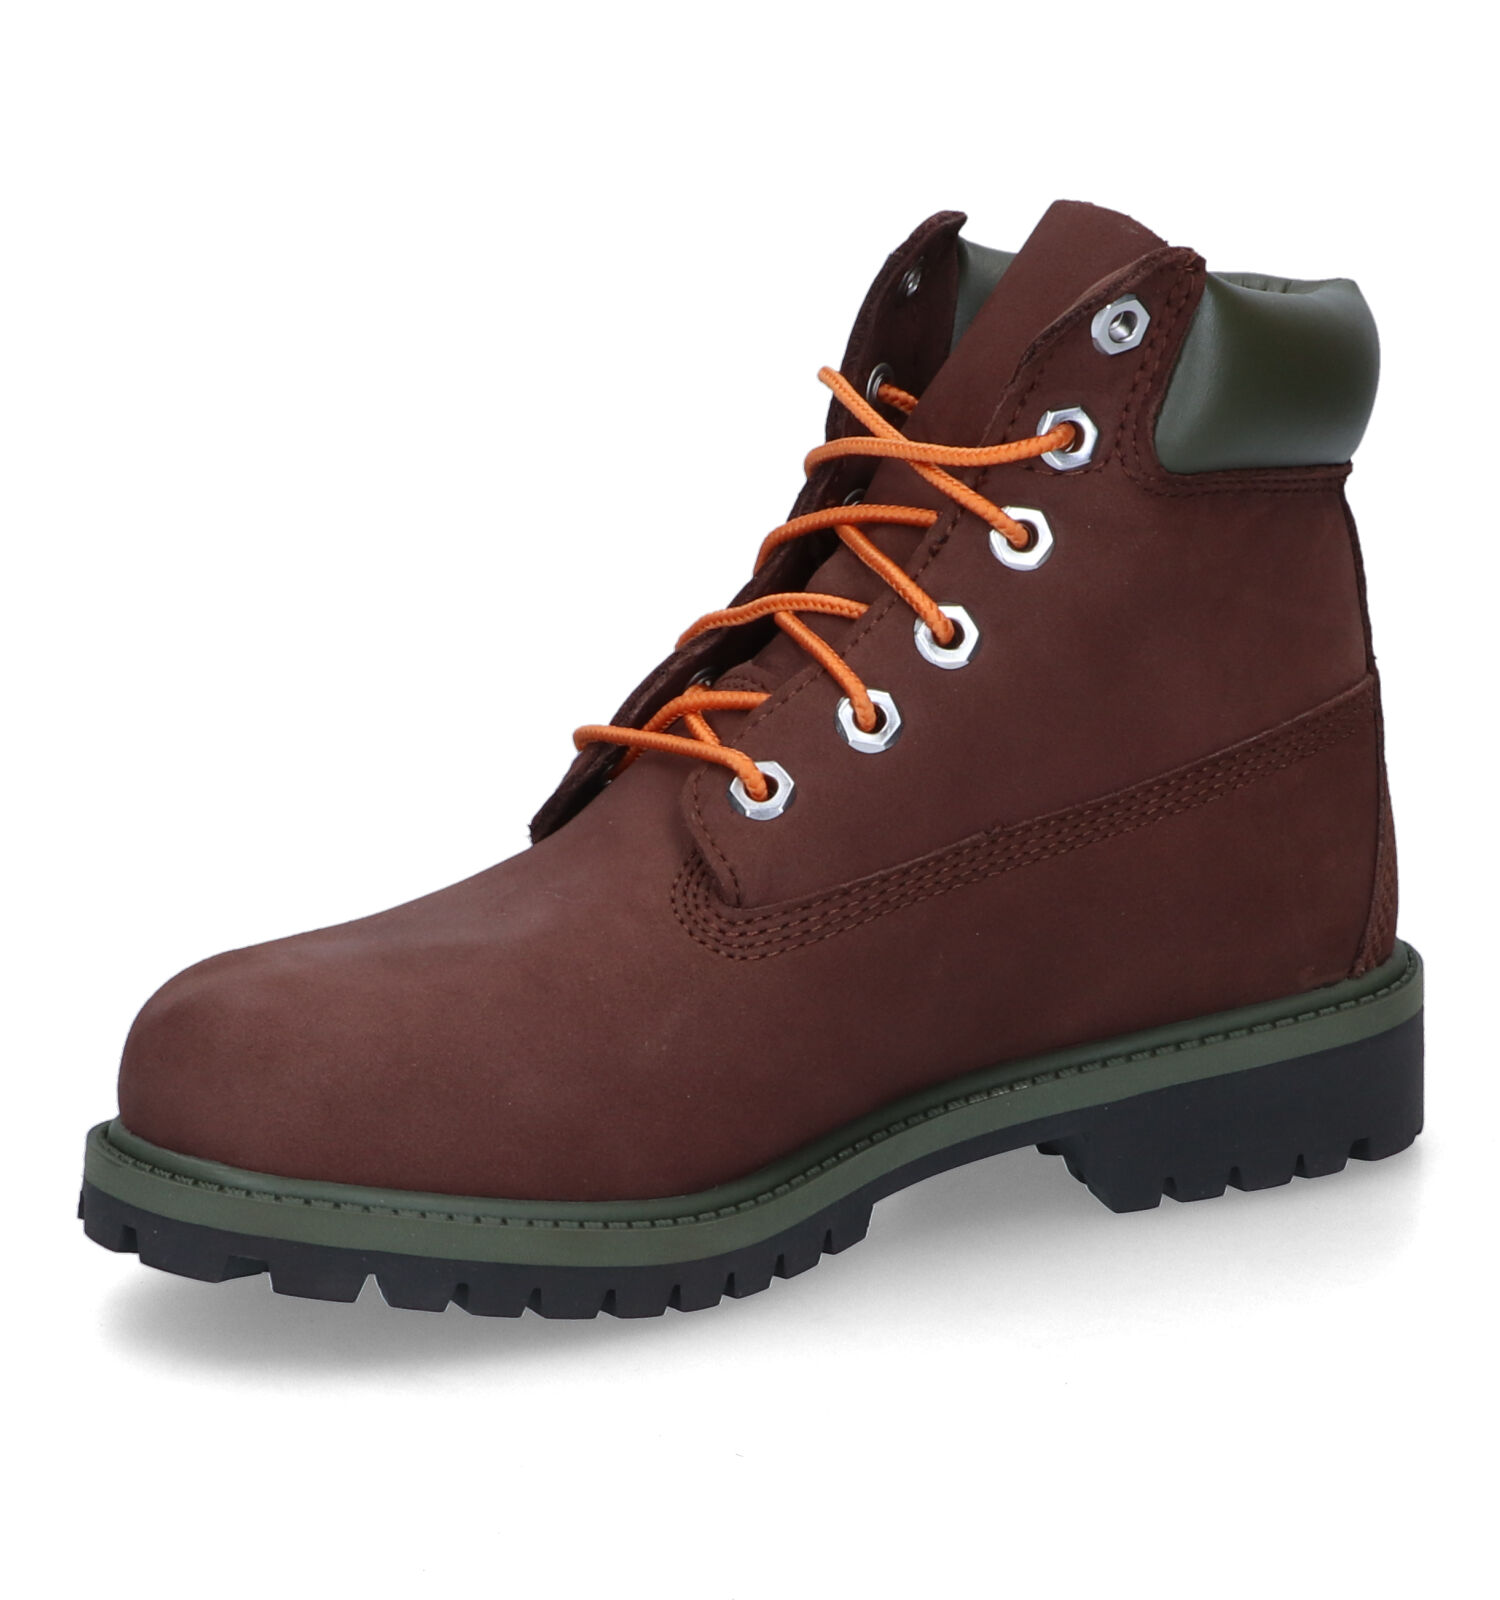 middag opmerking overdracht Timberland 6 Inch Premium WP Bruine Boots Kinderschoenen | TORFS.BE